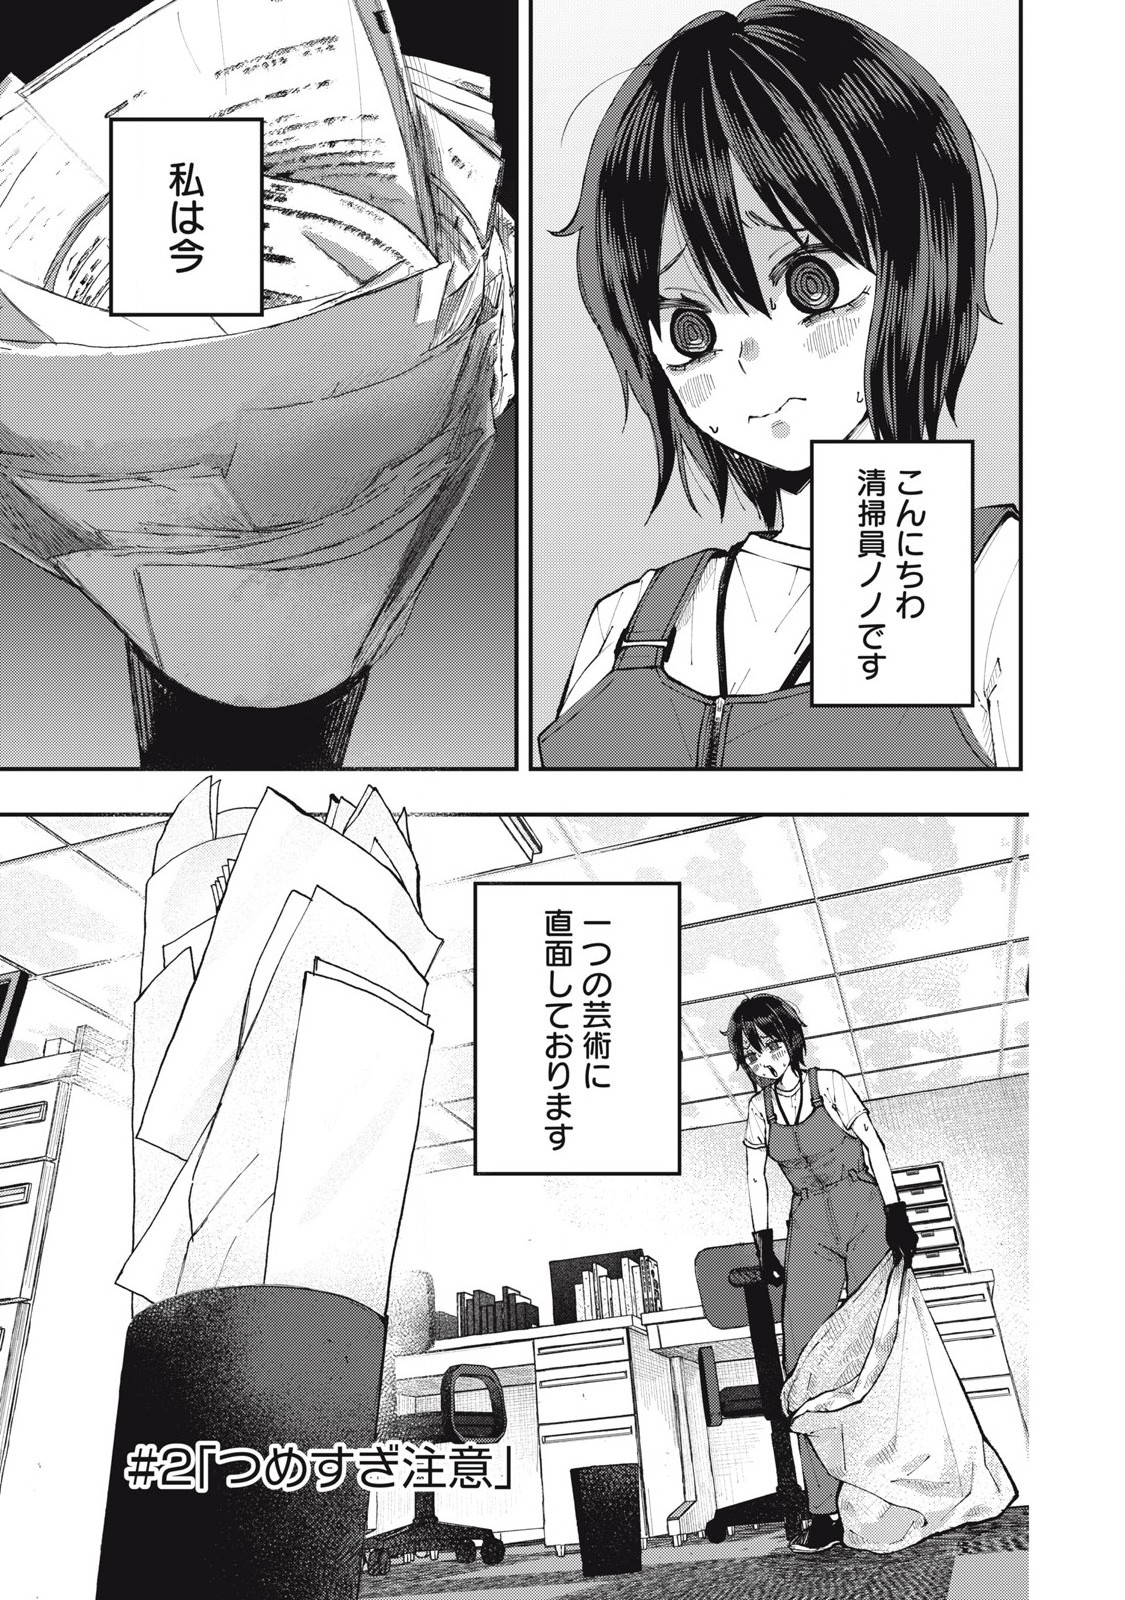 Seisouin Nono-chan Kyou no Tsubuyaki - Chapter 2 - Page 1